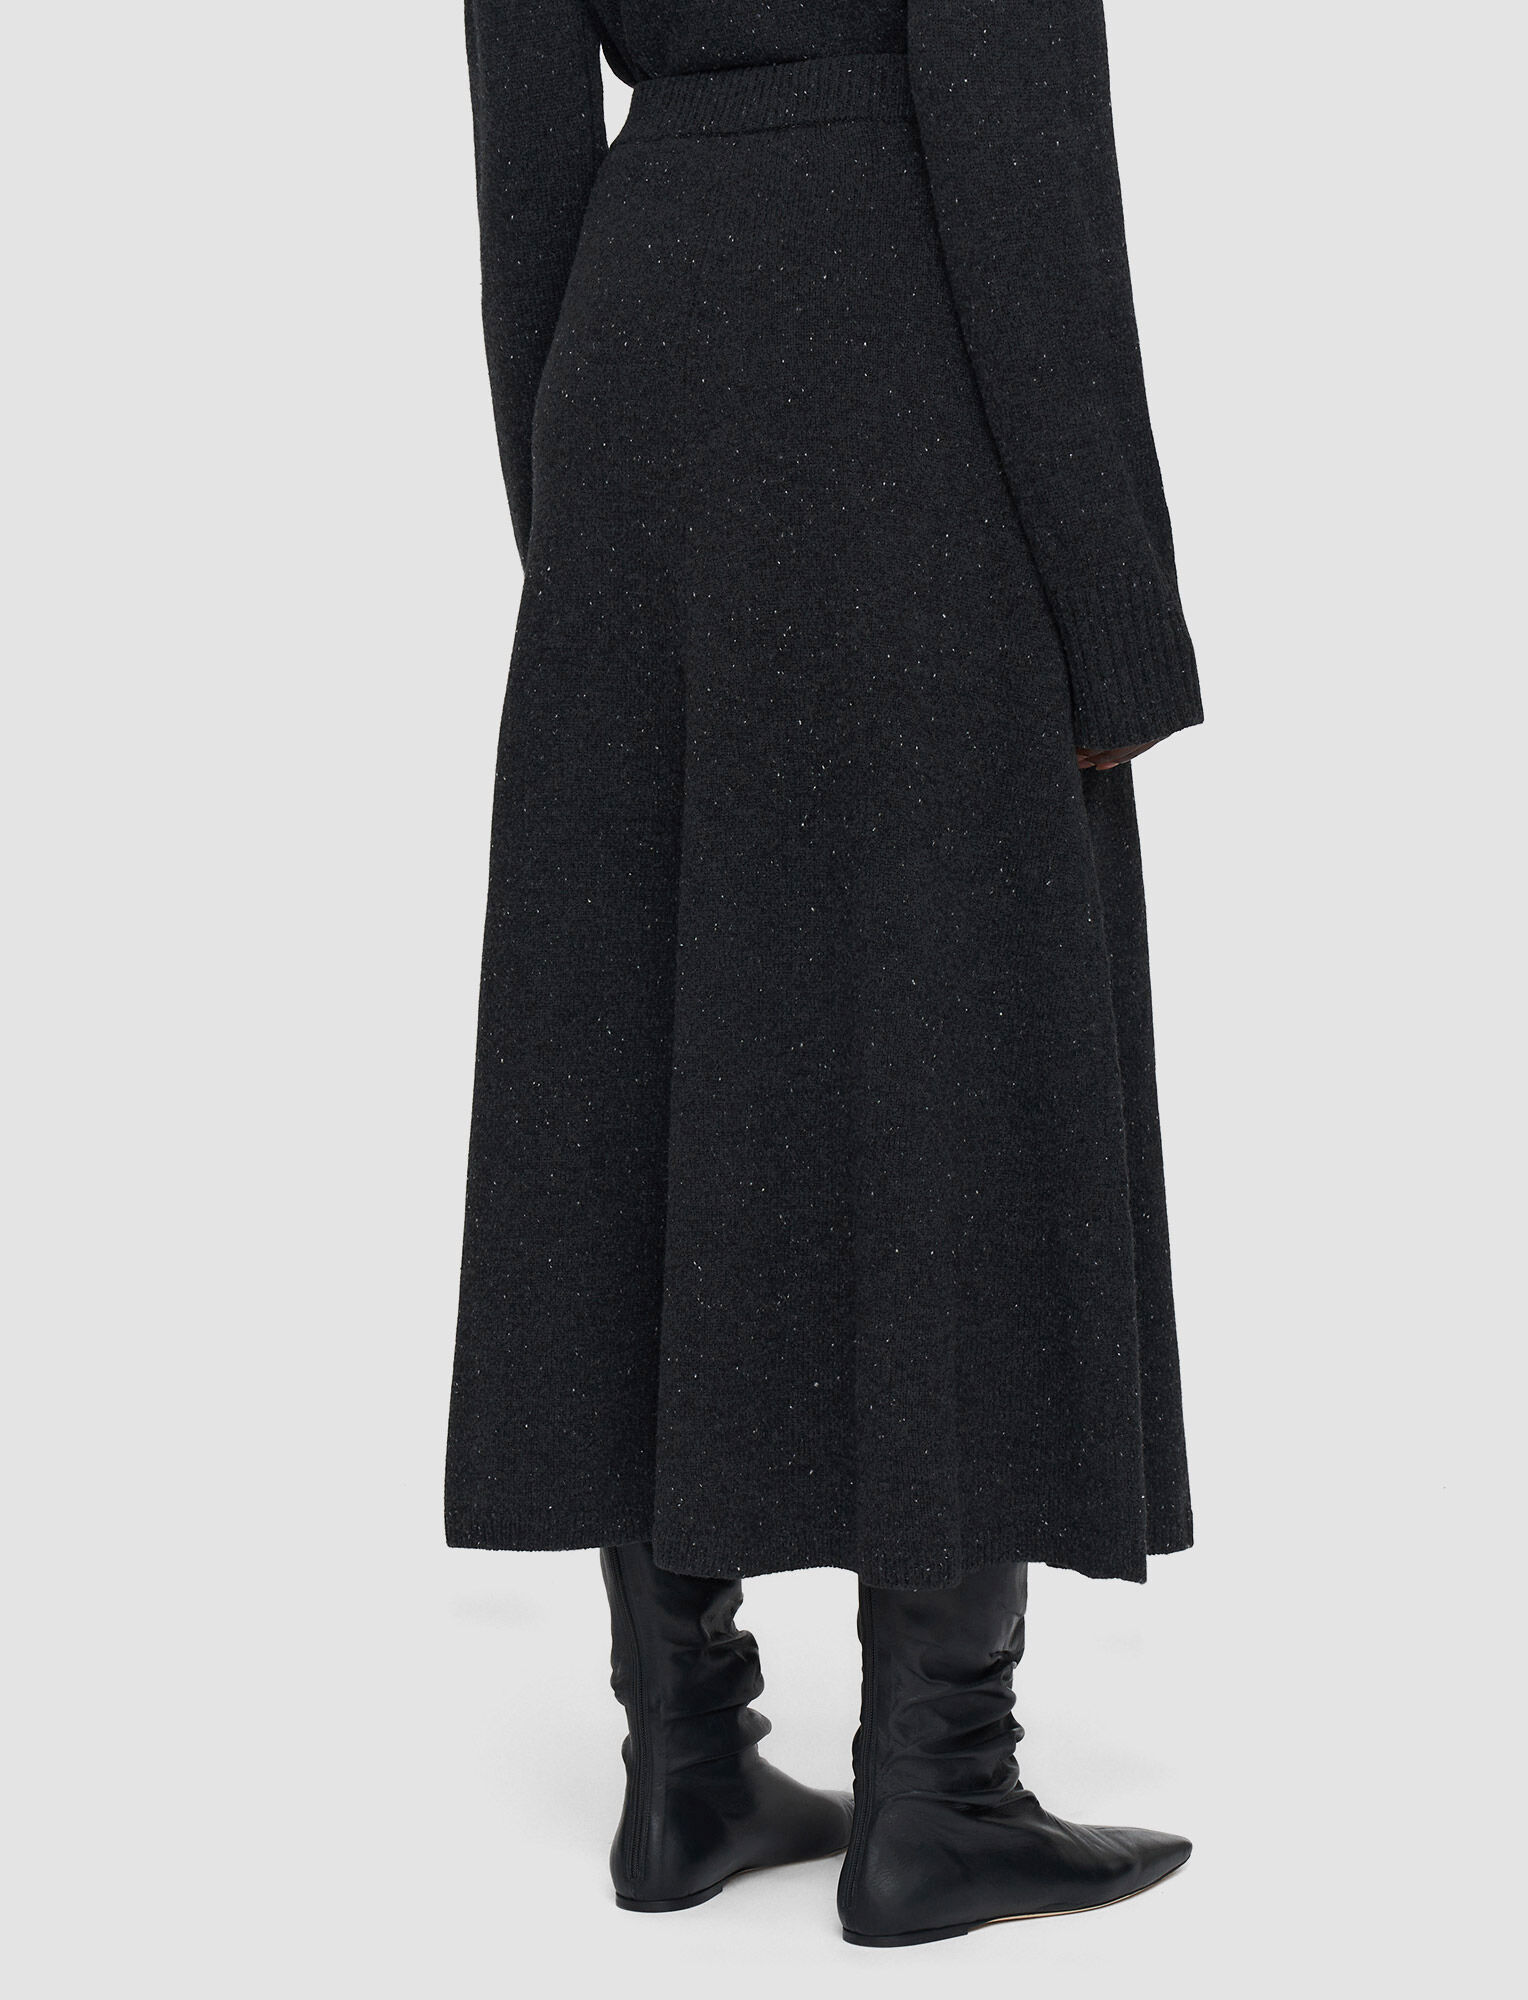 Joseph, Tweed Knit Skirt, in Black